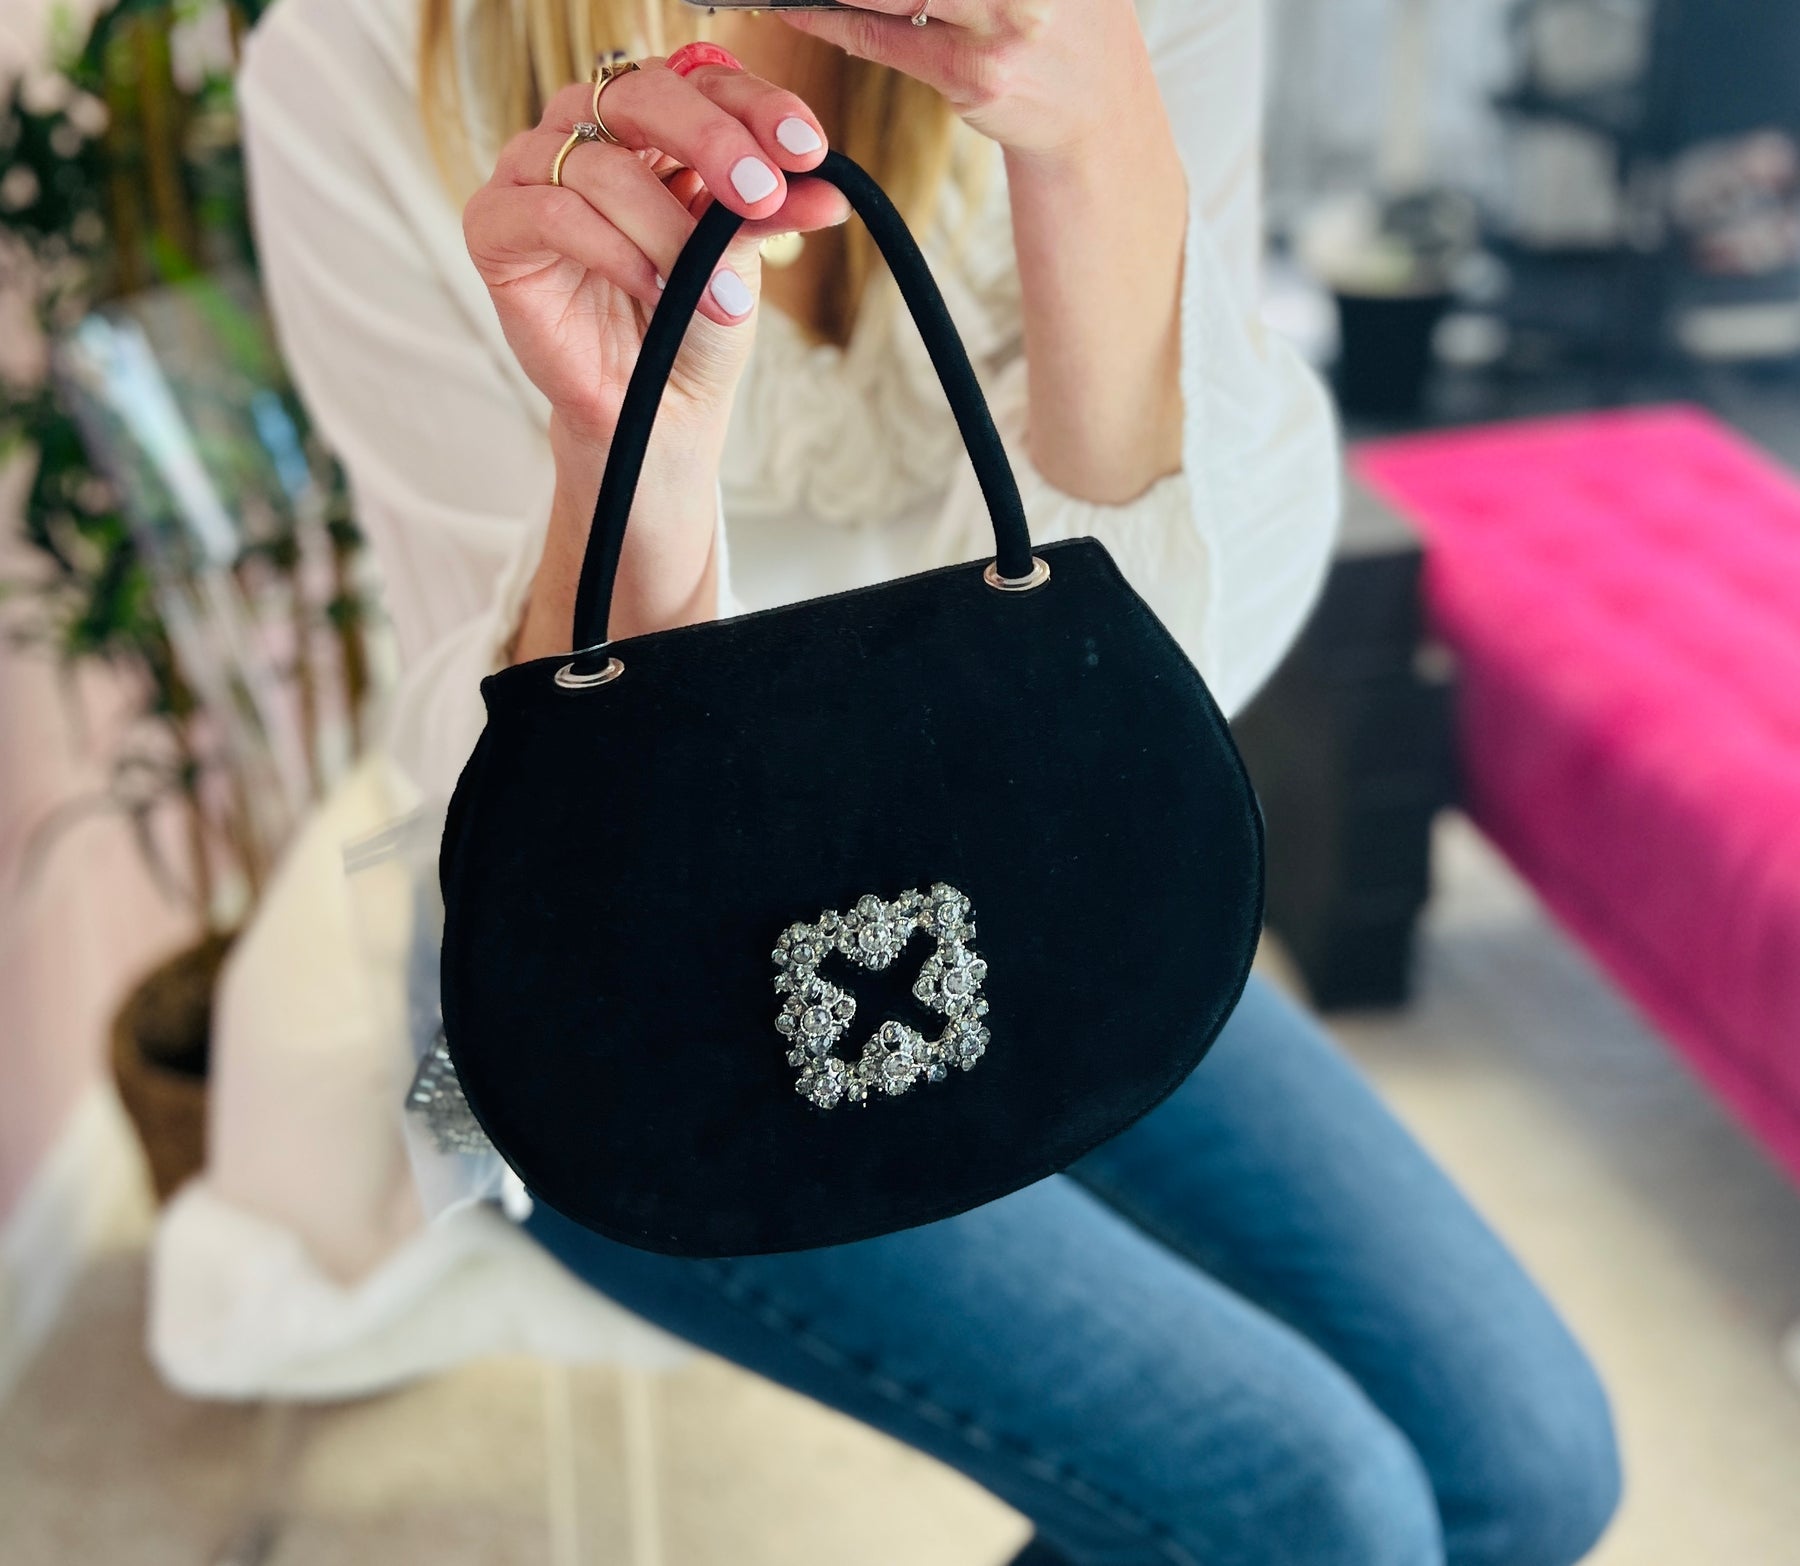 SAMPLE SALE Black suede evening bag with embellishment